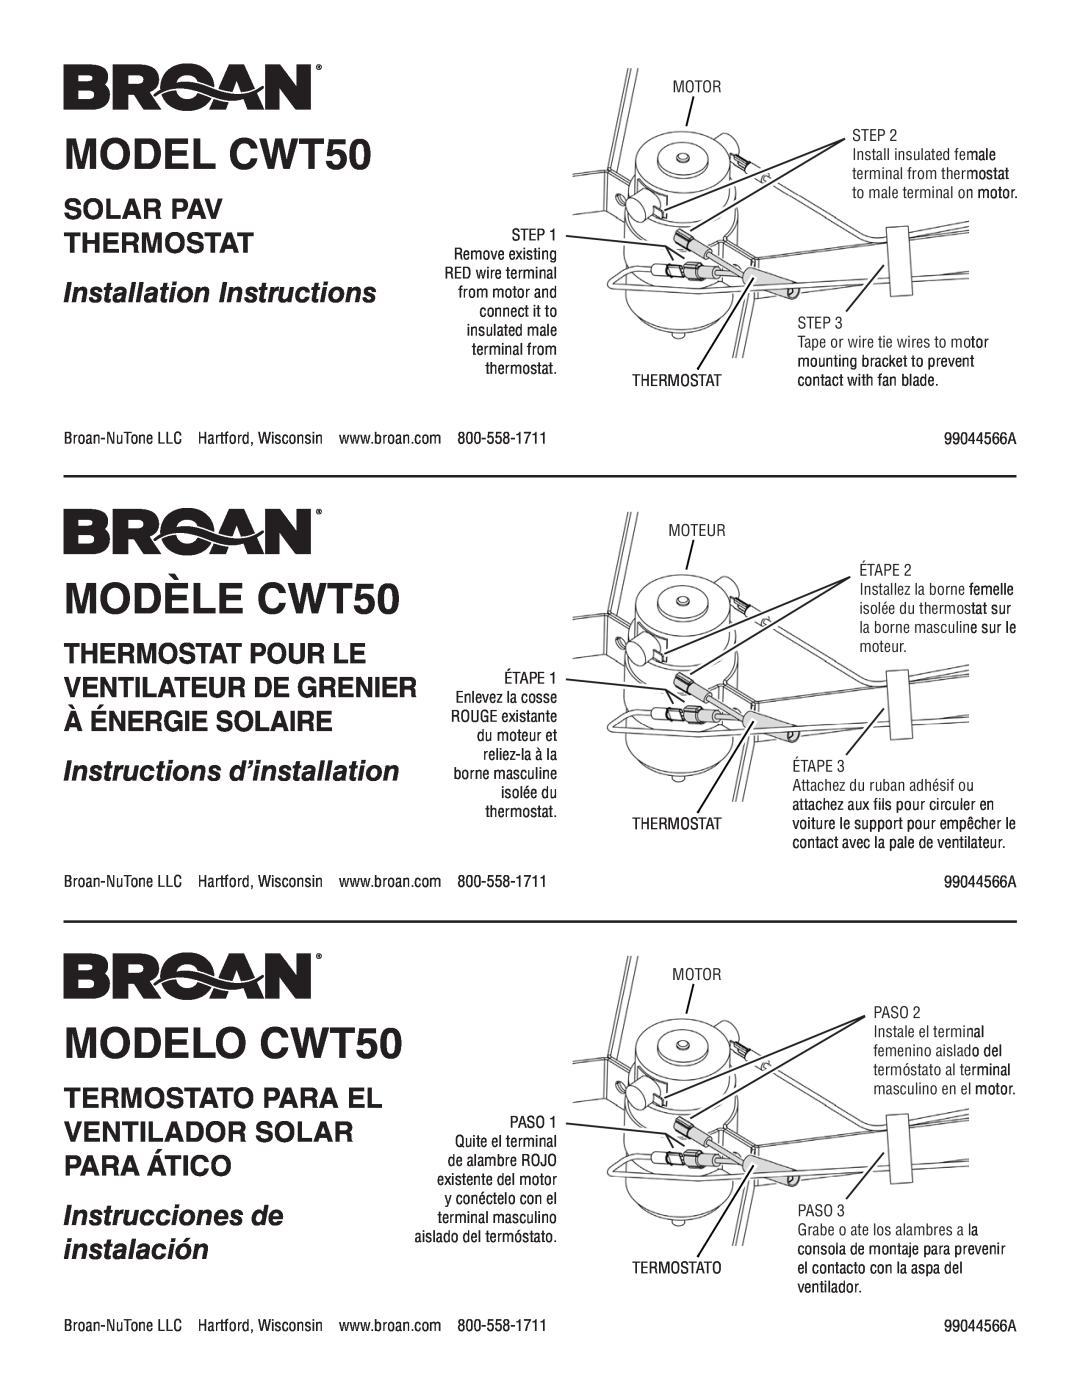 Broan installation instructions MODEL CWT50, MODÈLE CWT50, MODELO CWT50, Solar Pav Thermostat, Termostato Para El 